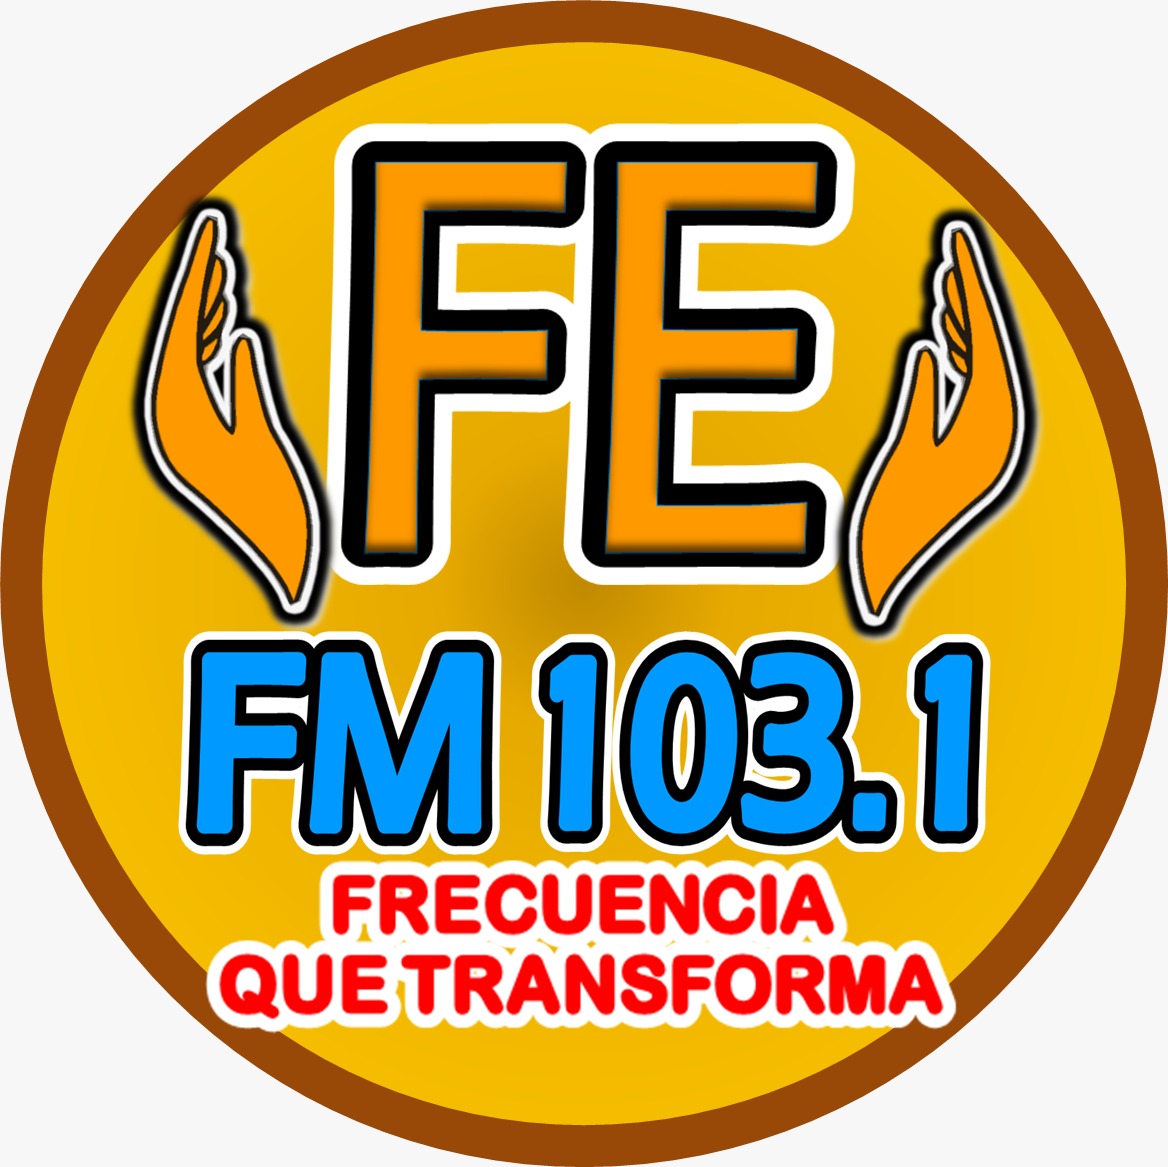 FE FM 103.1 